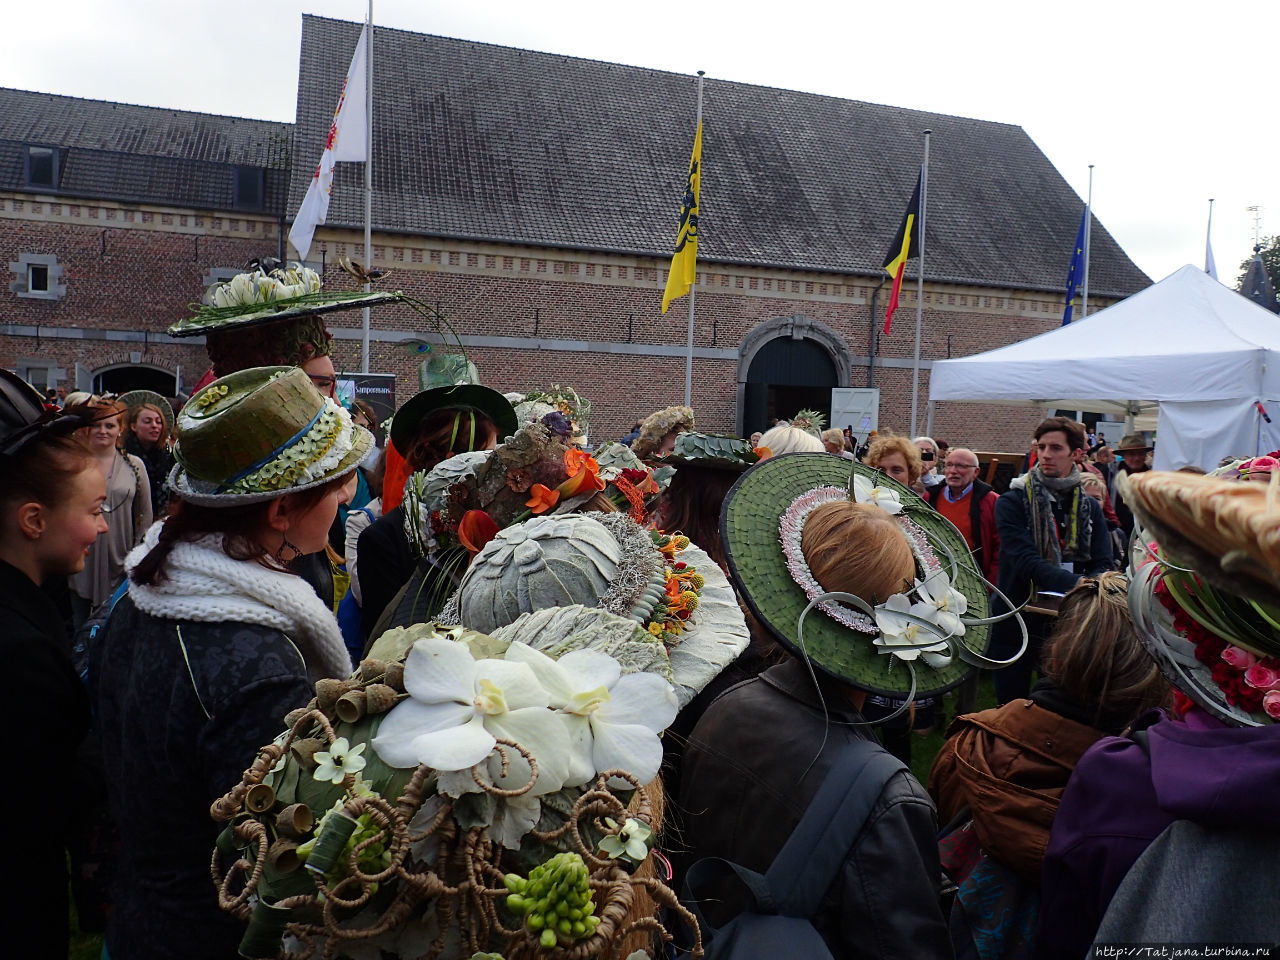 Конкурс  шляпок на фестивале цветов  Fleur Amour Билзен, Бельгия